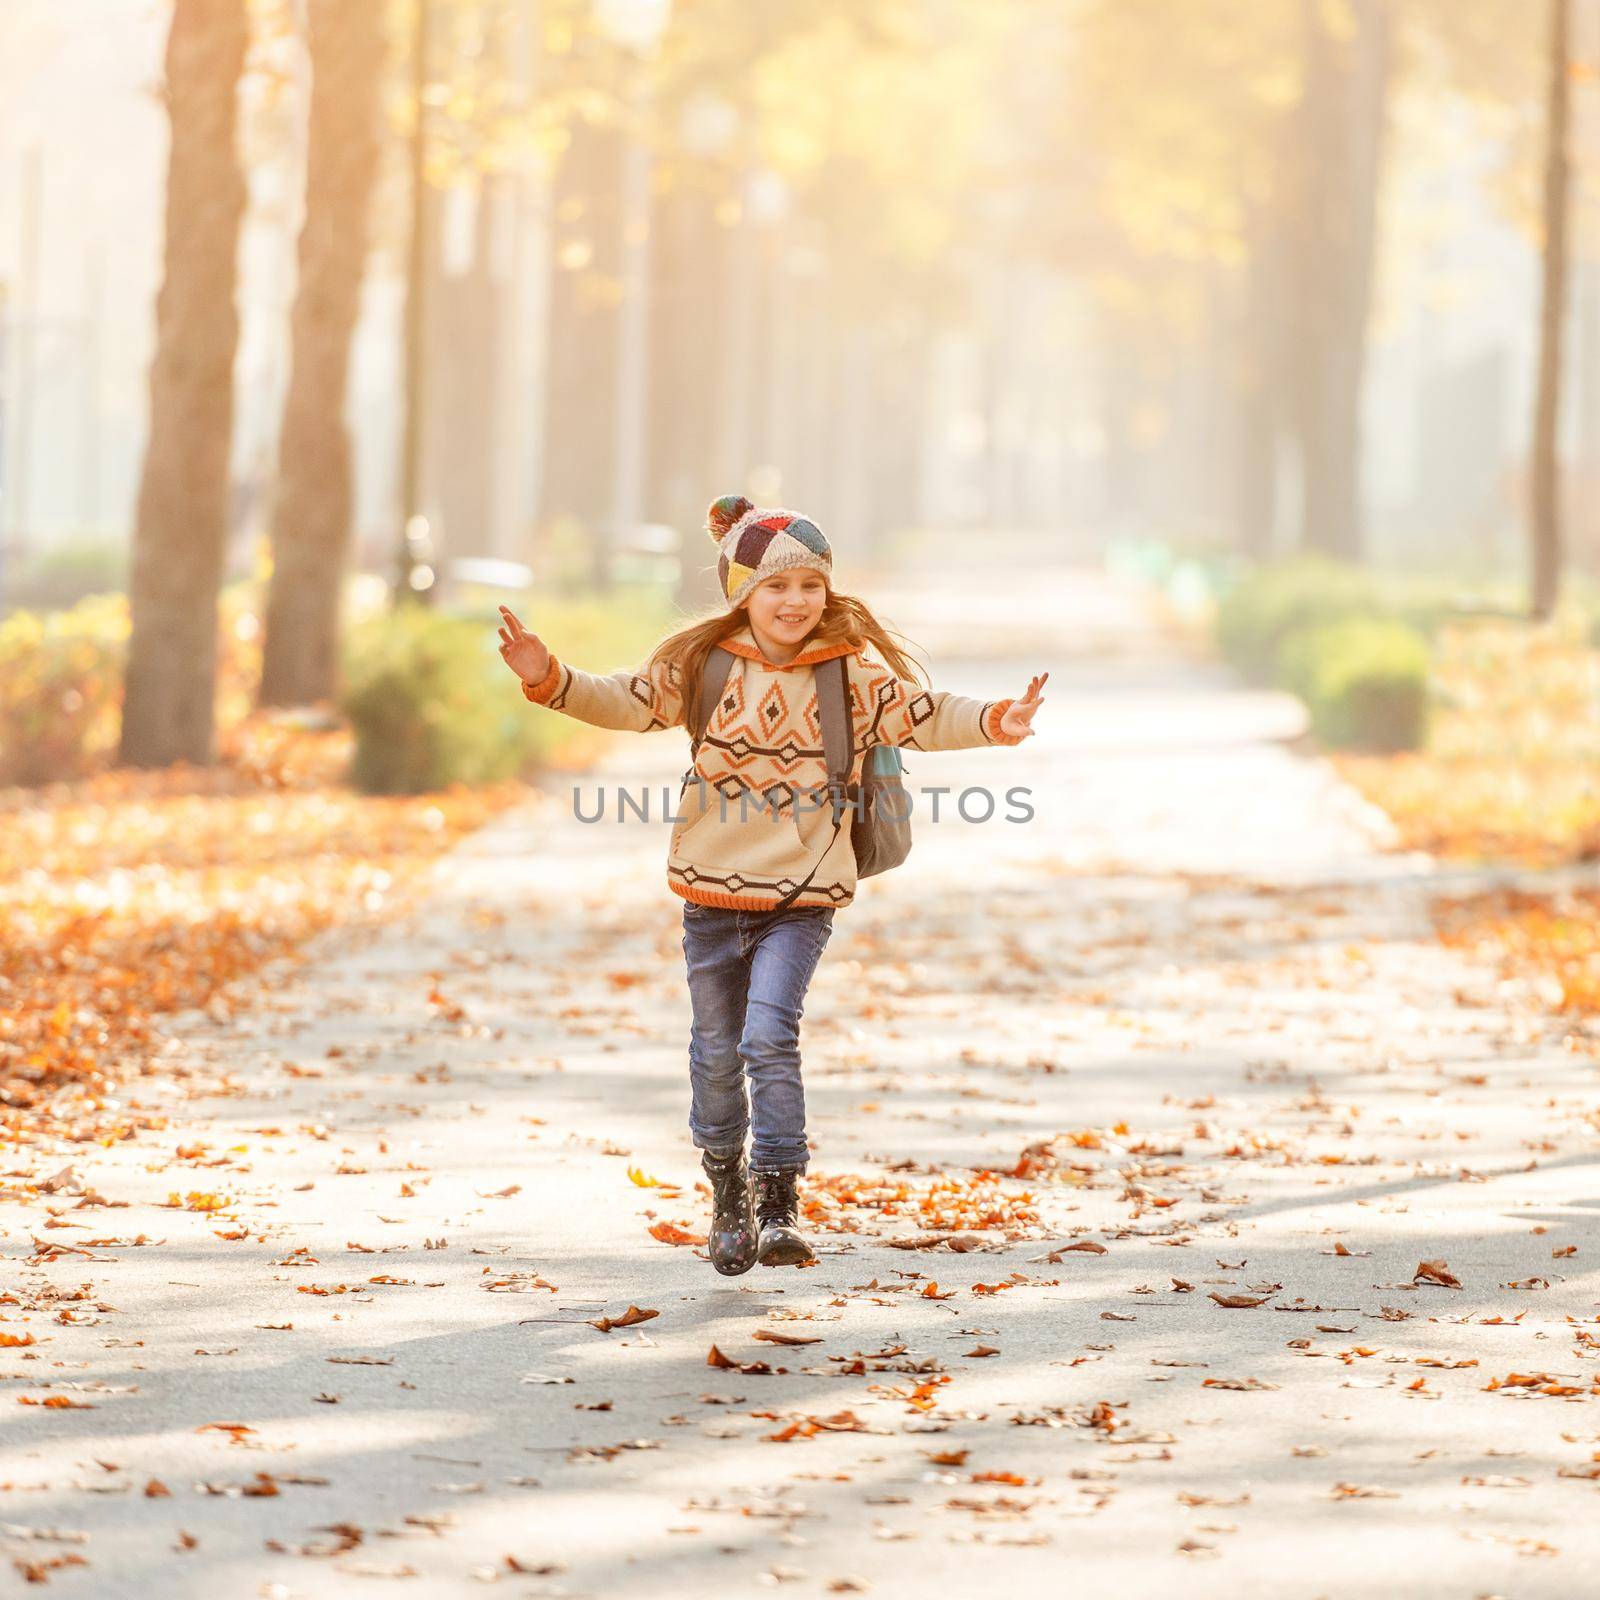 Smiling schoolchild in autumn park by tan4ikk1